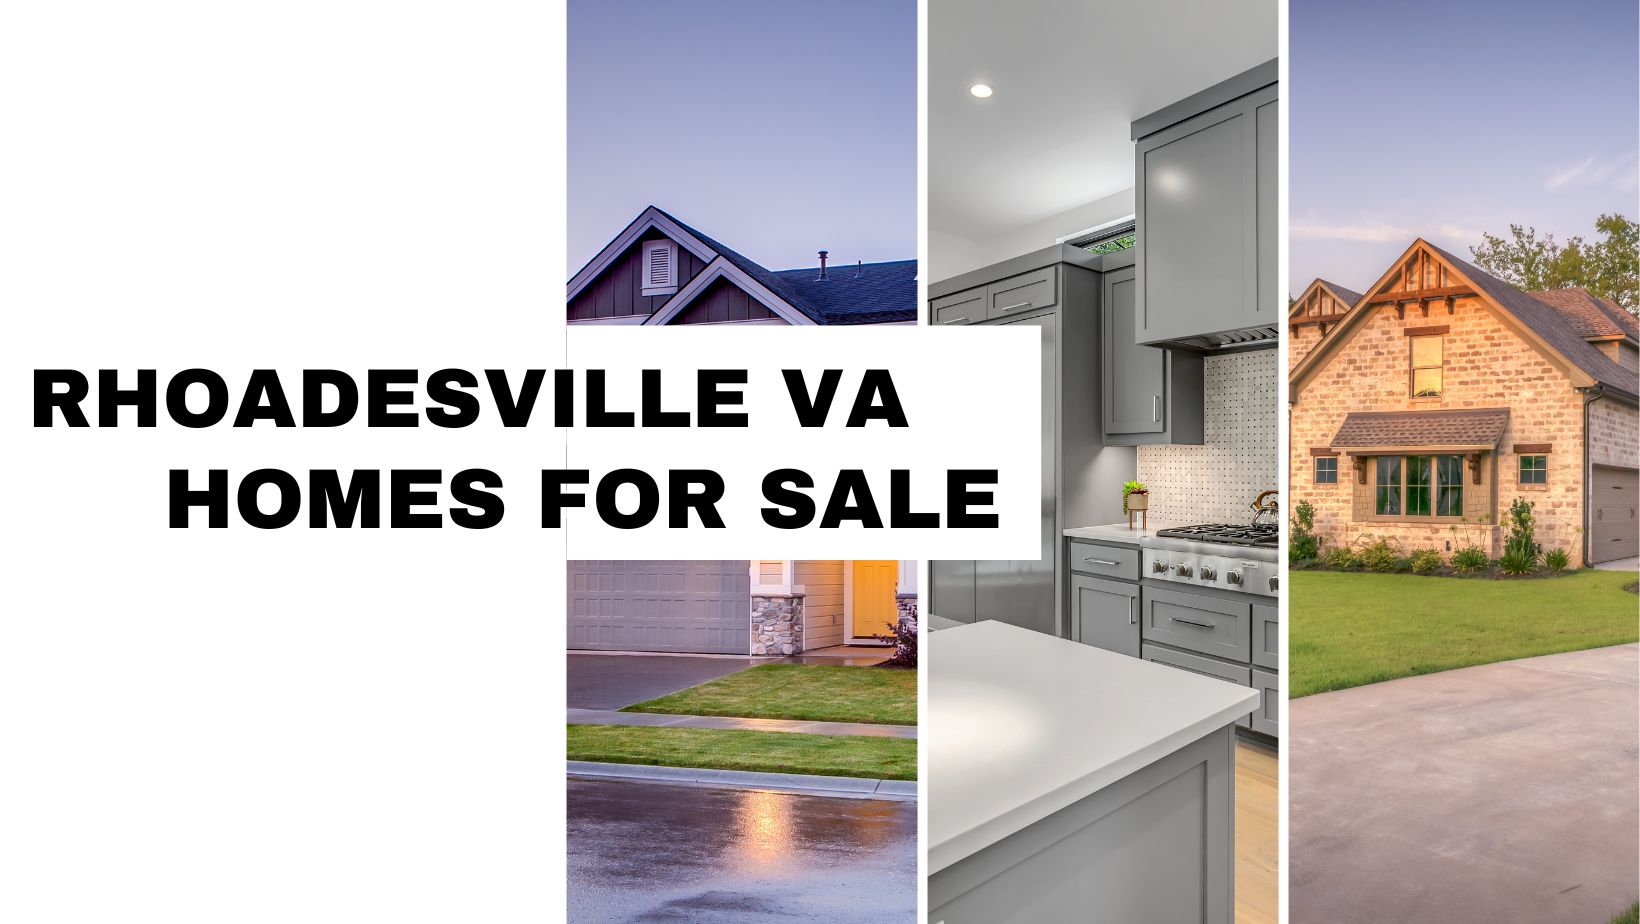 Rhoadesville VA Homes for Sale Orange County